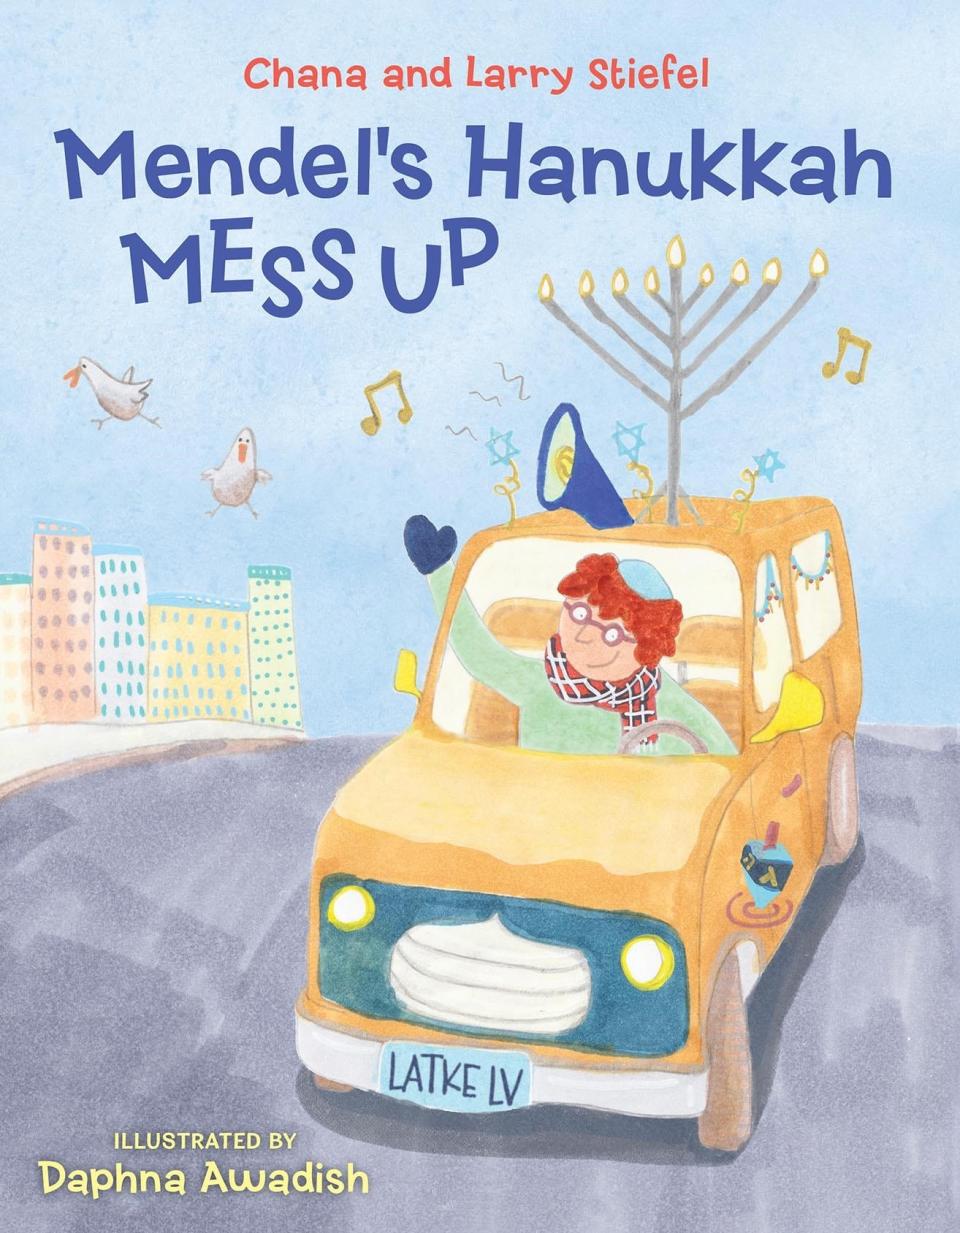 Mendel's Hanukkah Mess Up by Chana and Larry Steifel